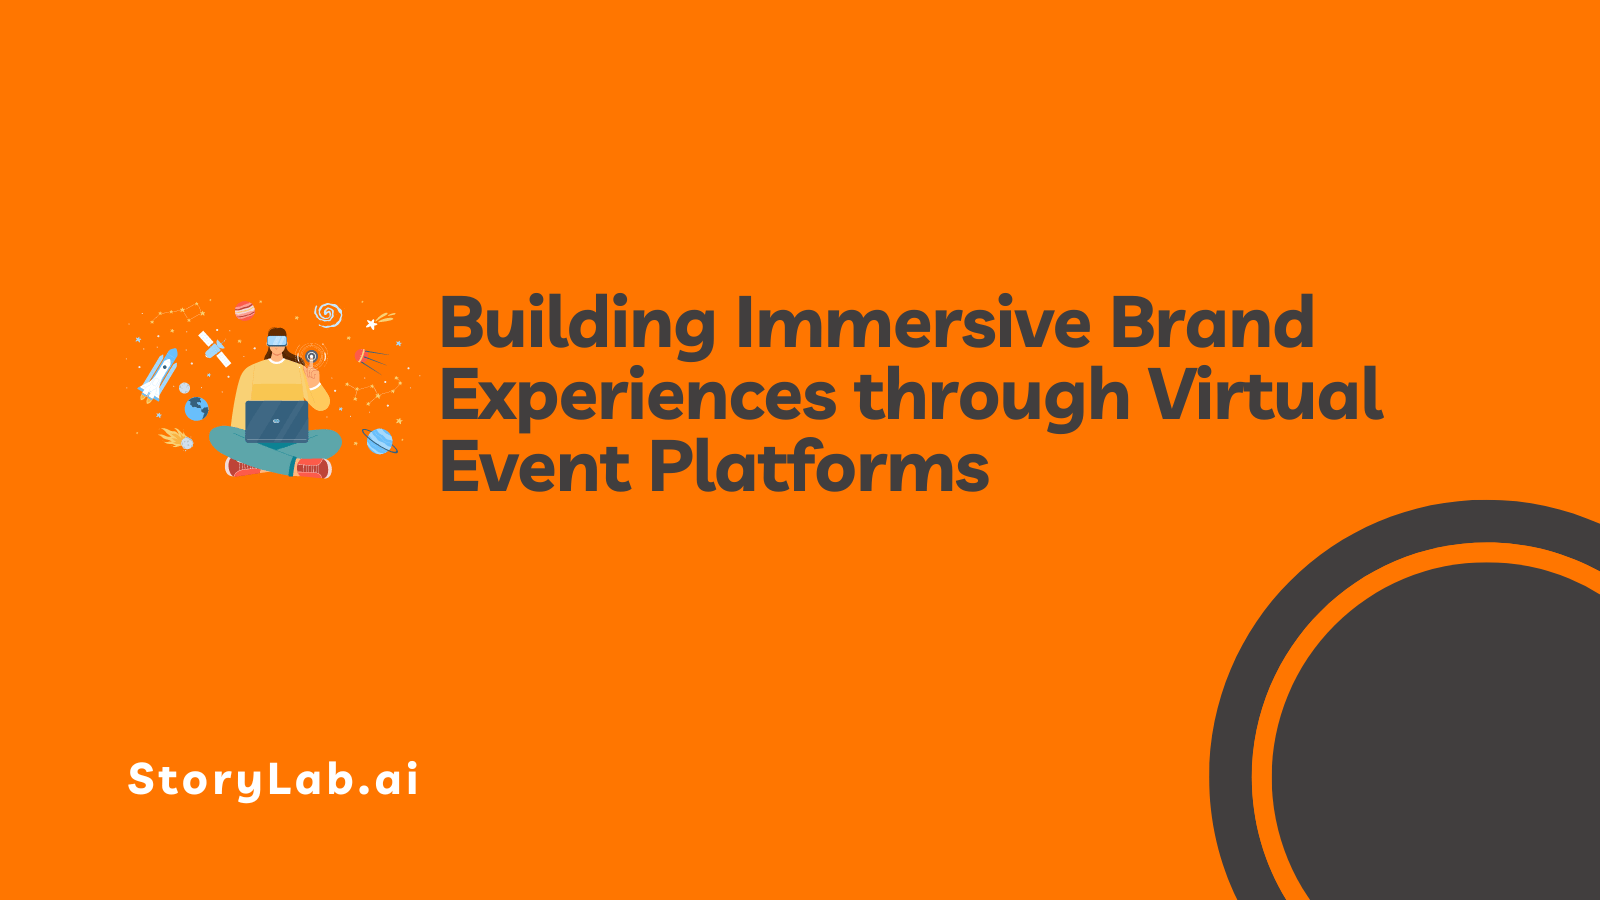 Building Immersive Brand Experiences through Virtual Event Platforms